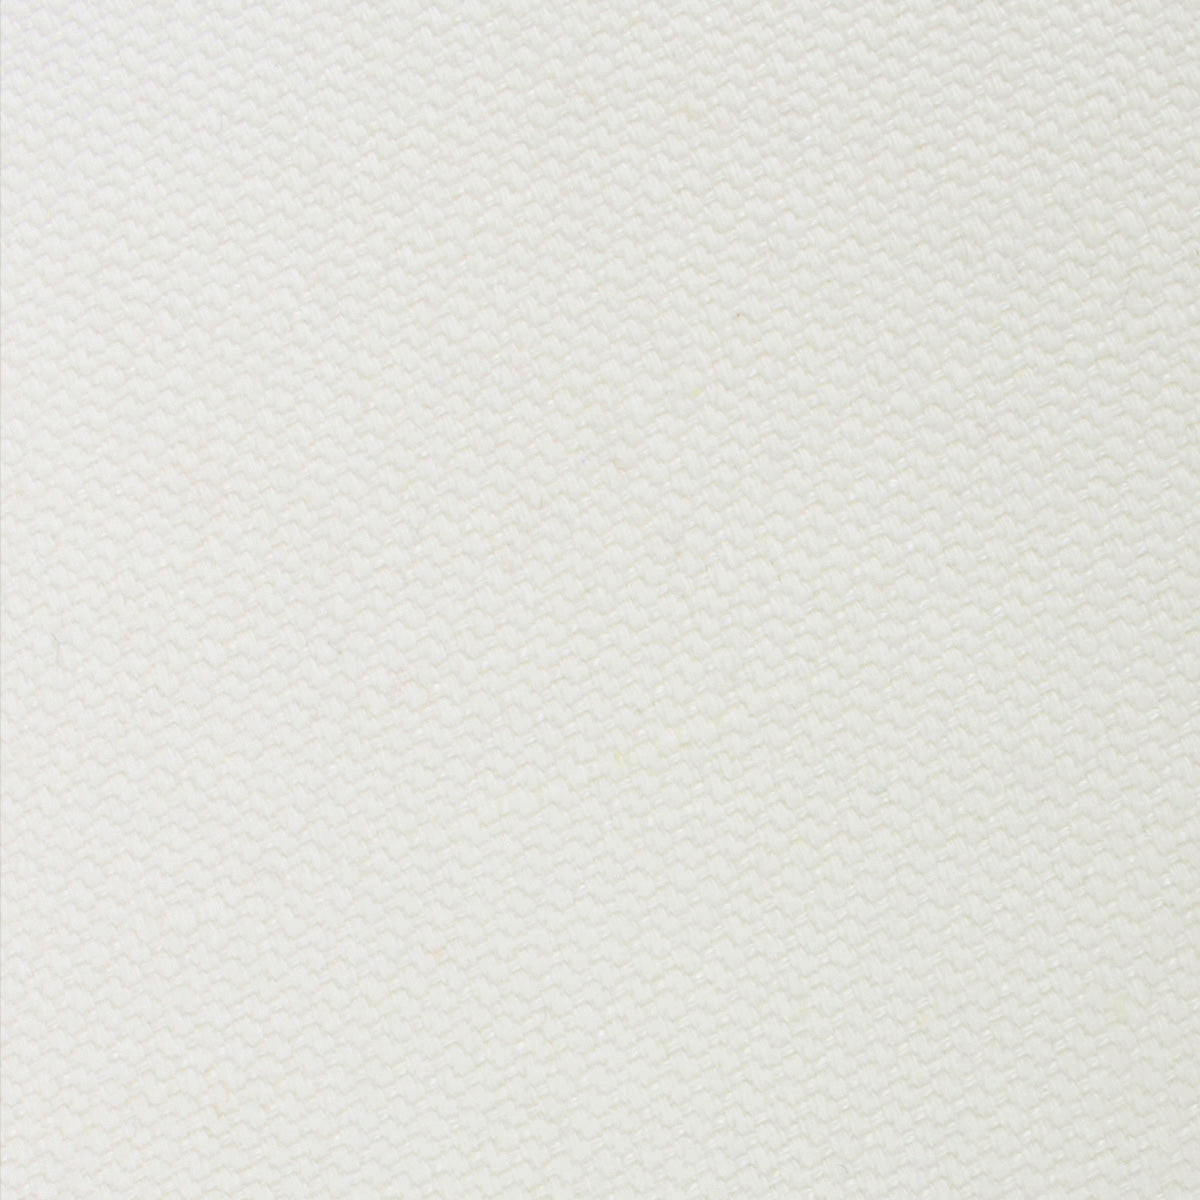 Stark White Twill Linen Fabric Swatch